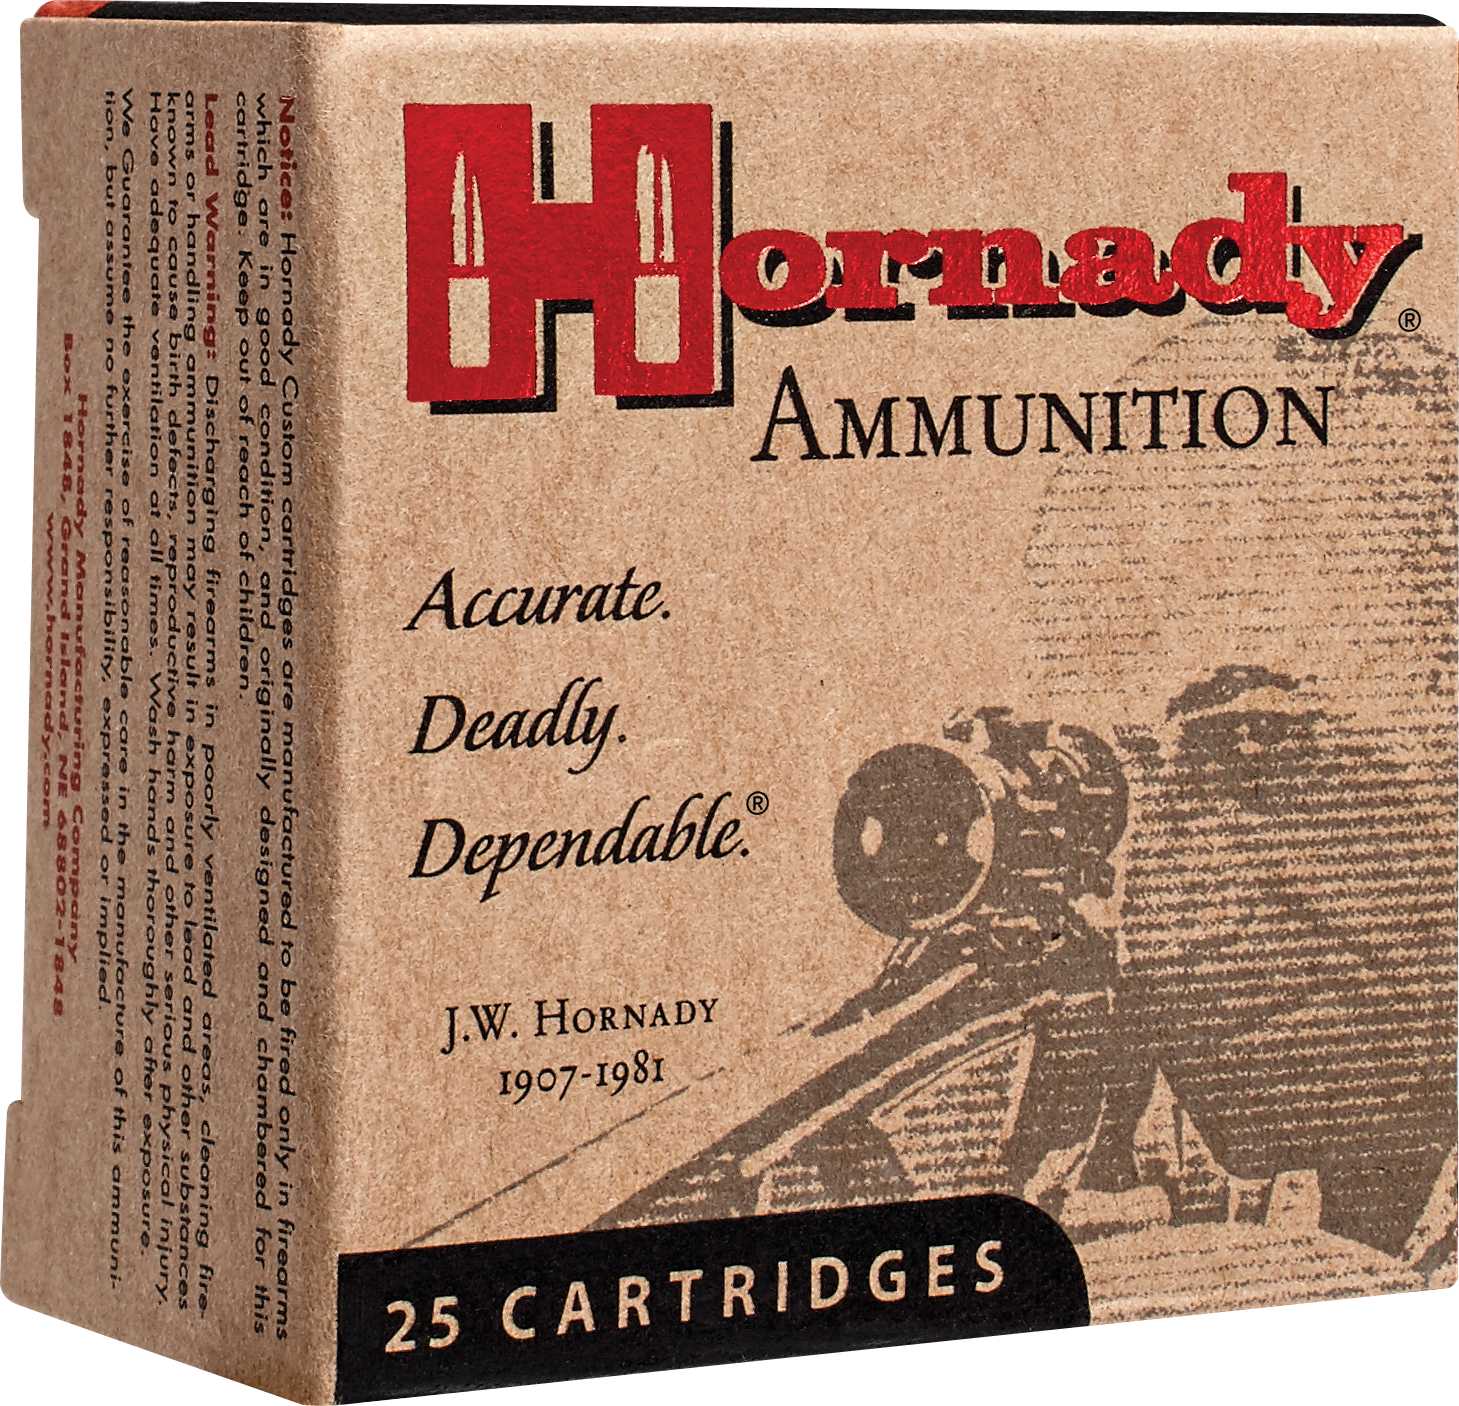 45 Colt 20 Rounds Ammunition Hornady 255 Grain Lead